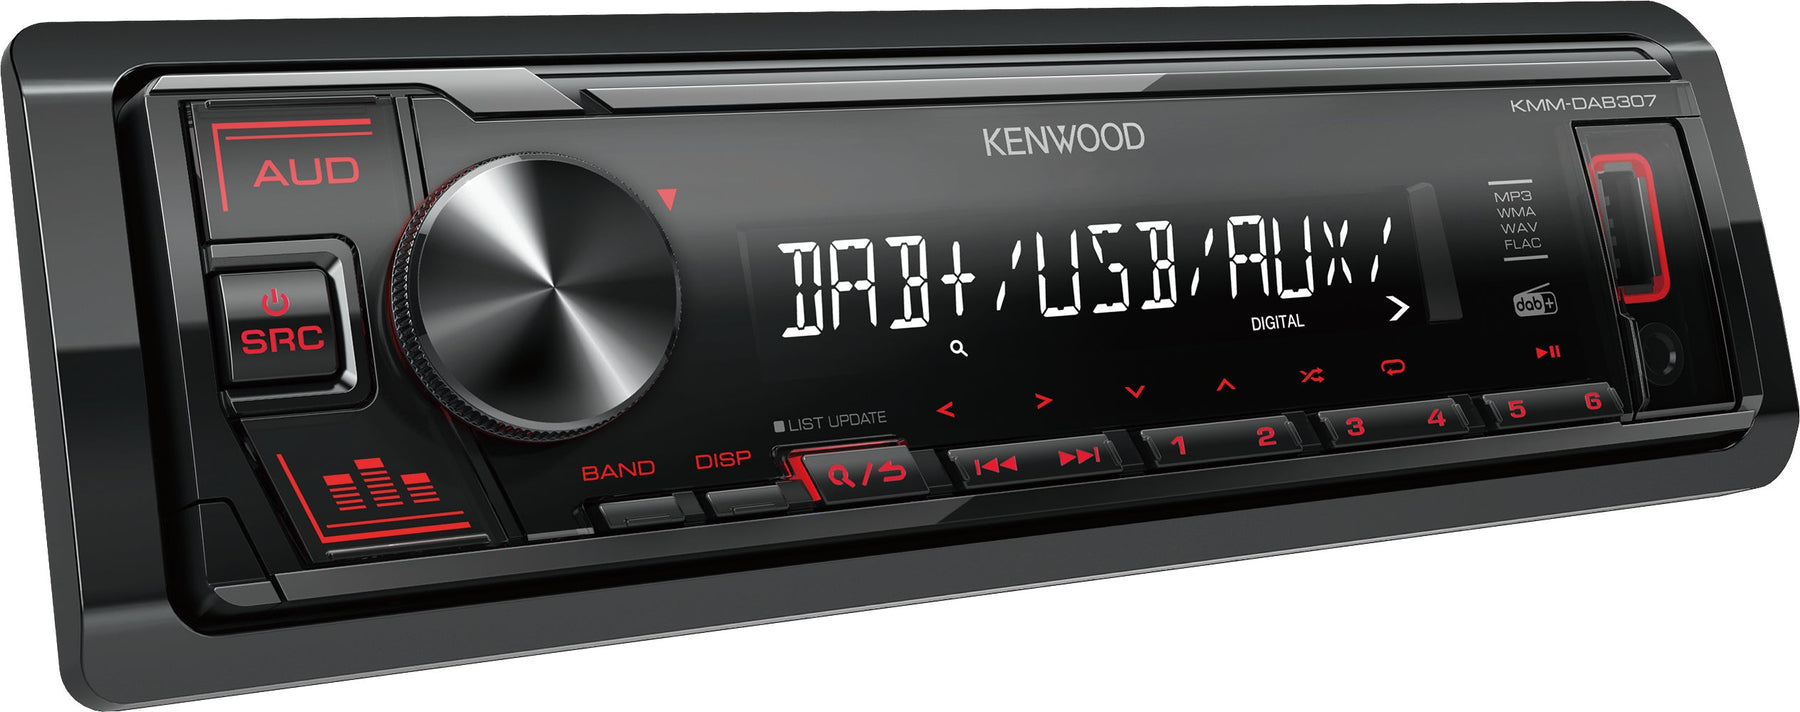 OUTLET Kenwood KMM-DAB307. Digital Media Receiver con Digital Radio DAB+ built-in